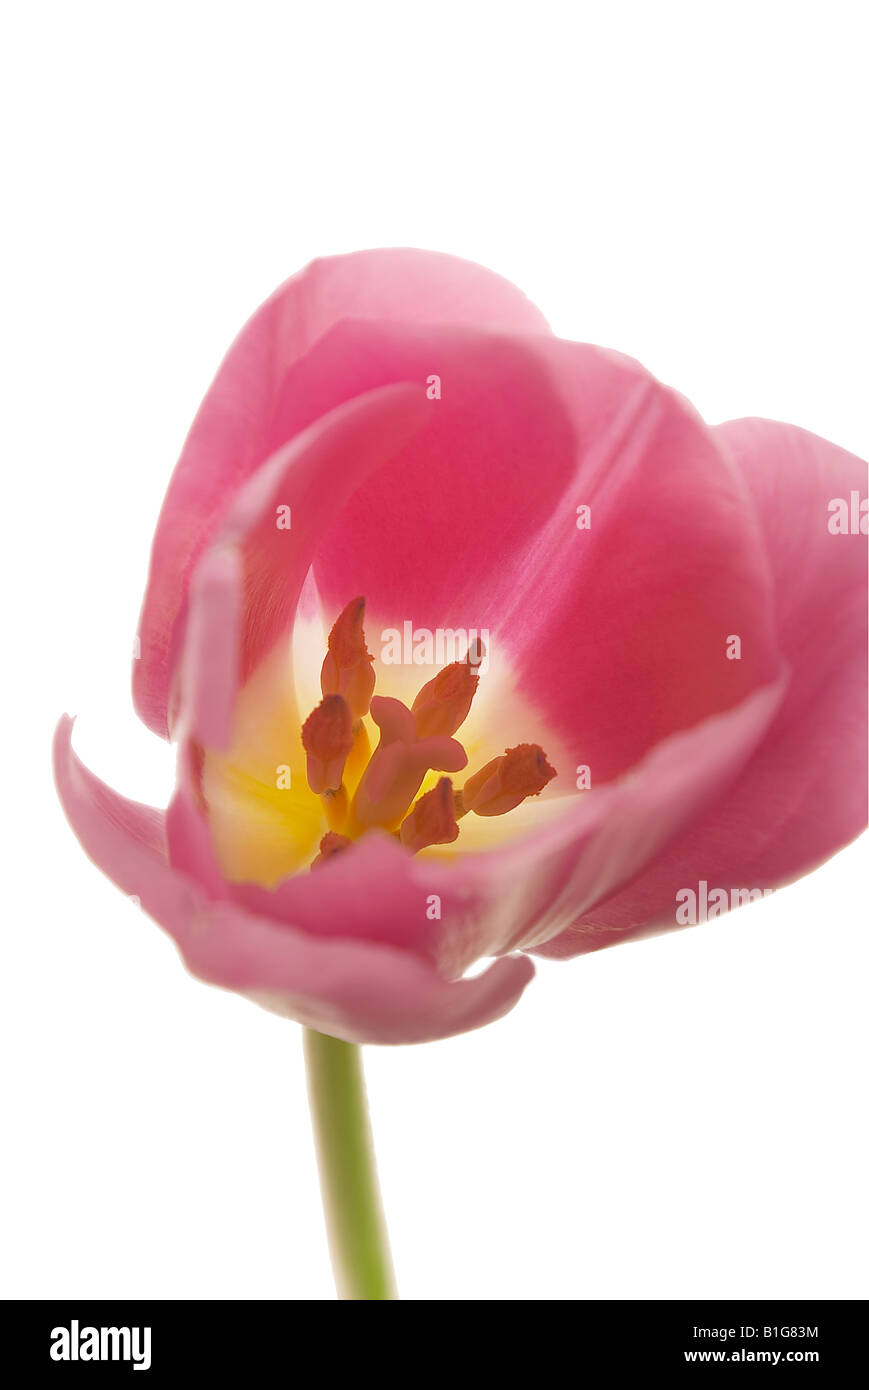 rose flower still life white background tulip pine apple blossom daffodil Stock Photo